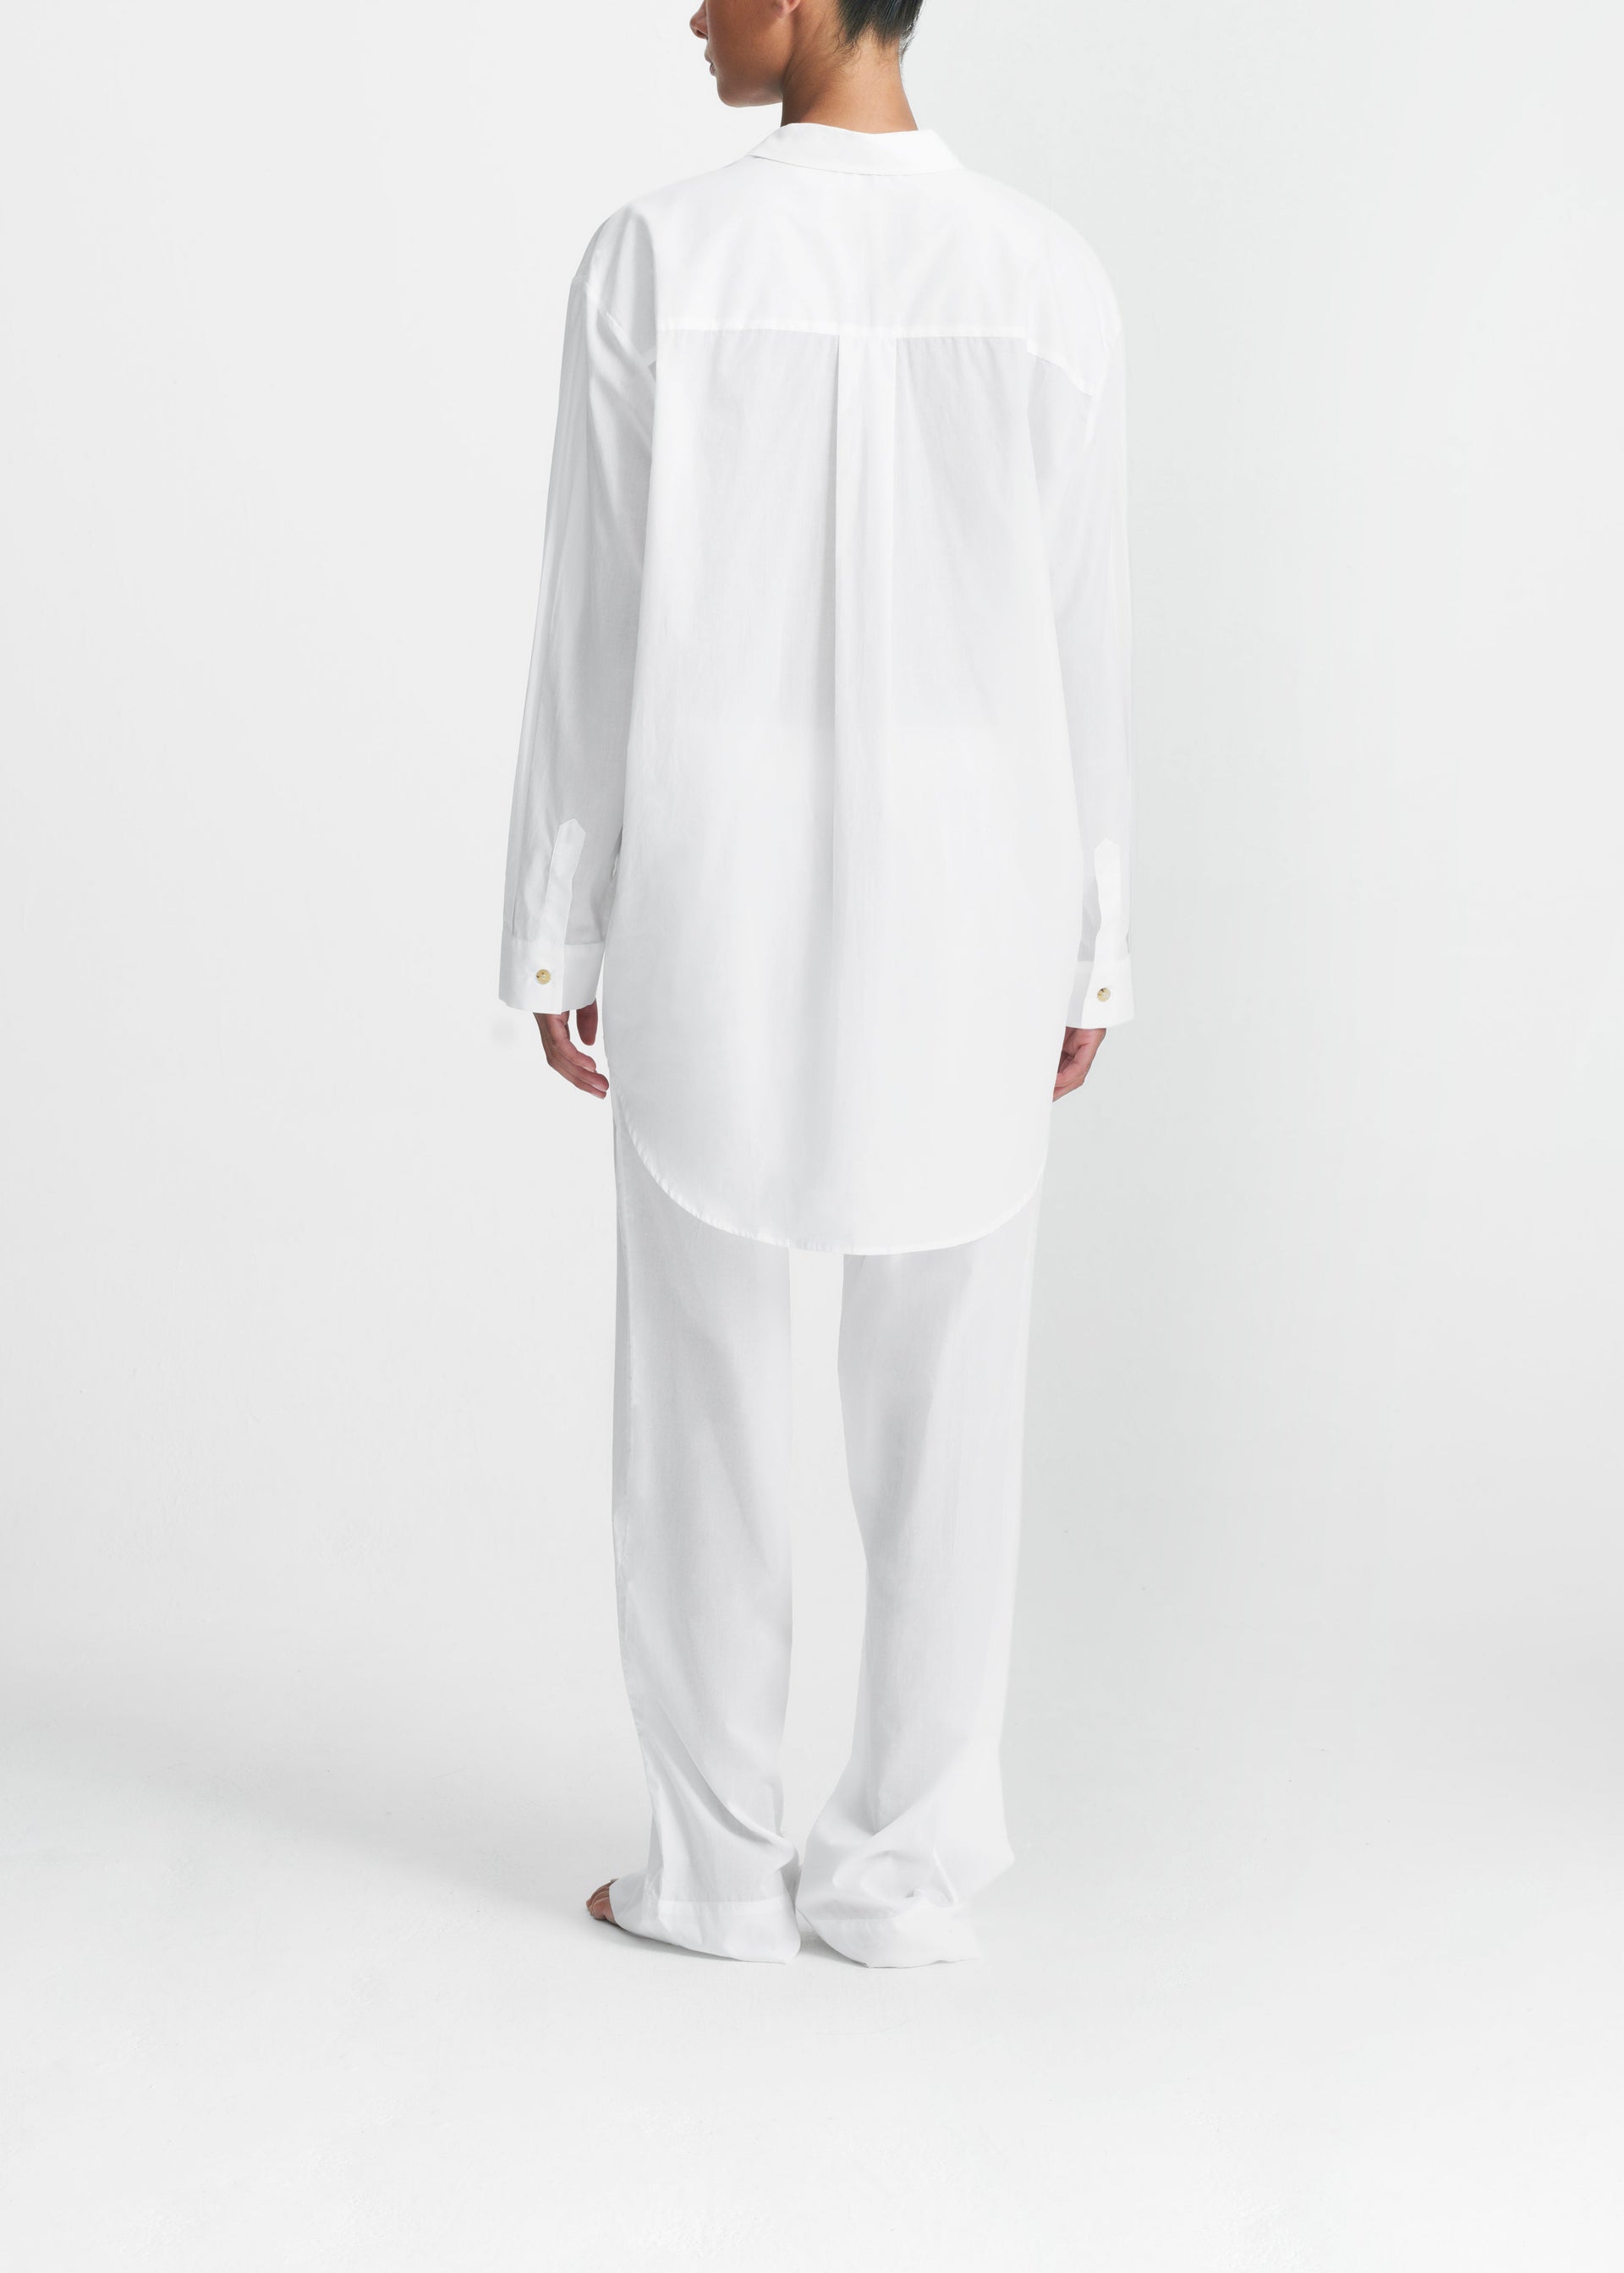 London Pyjama Top White Cotton